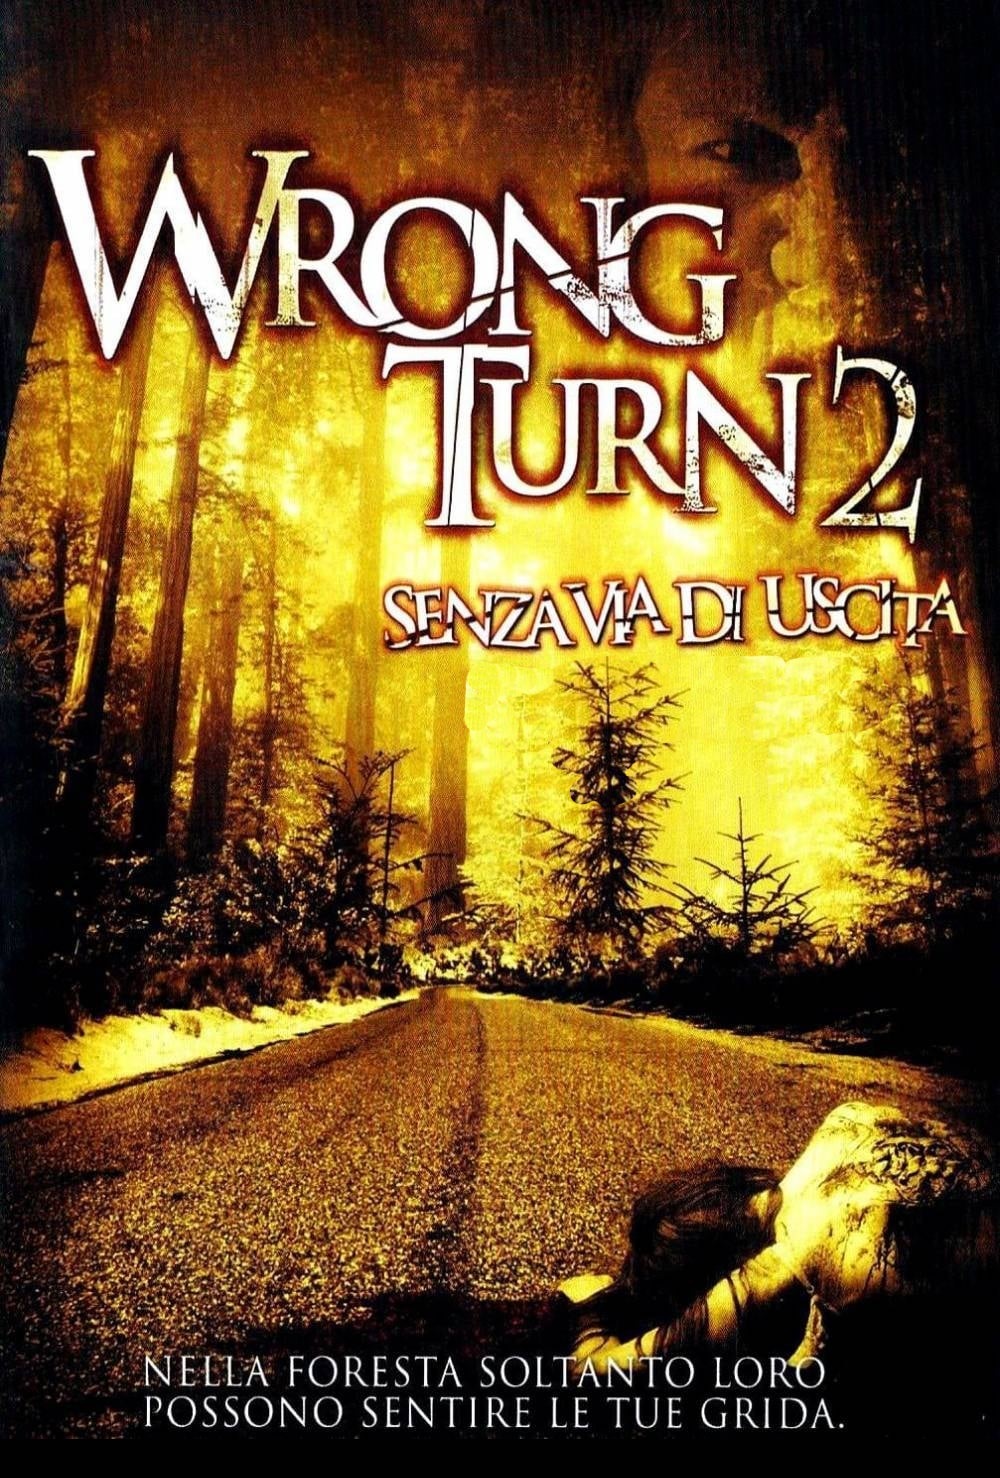 Wrong Turn 2: Senza via di uscita [HD] (2007)